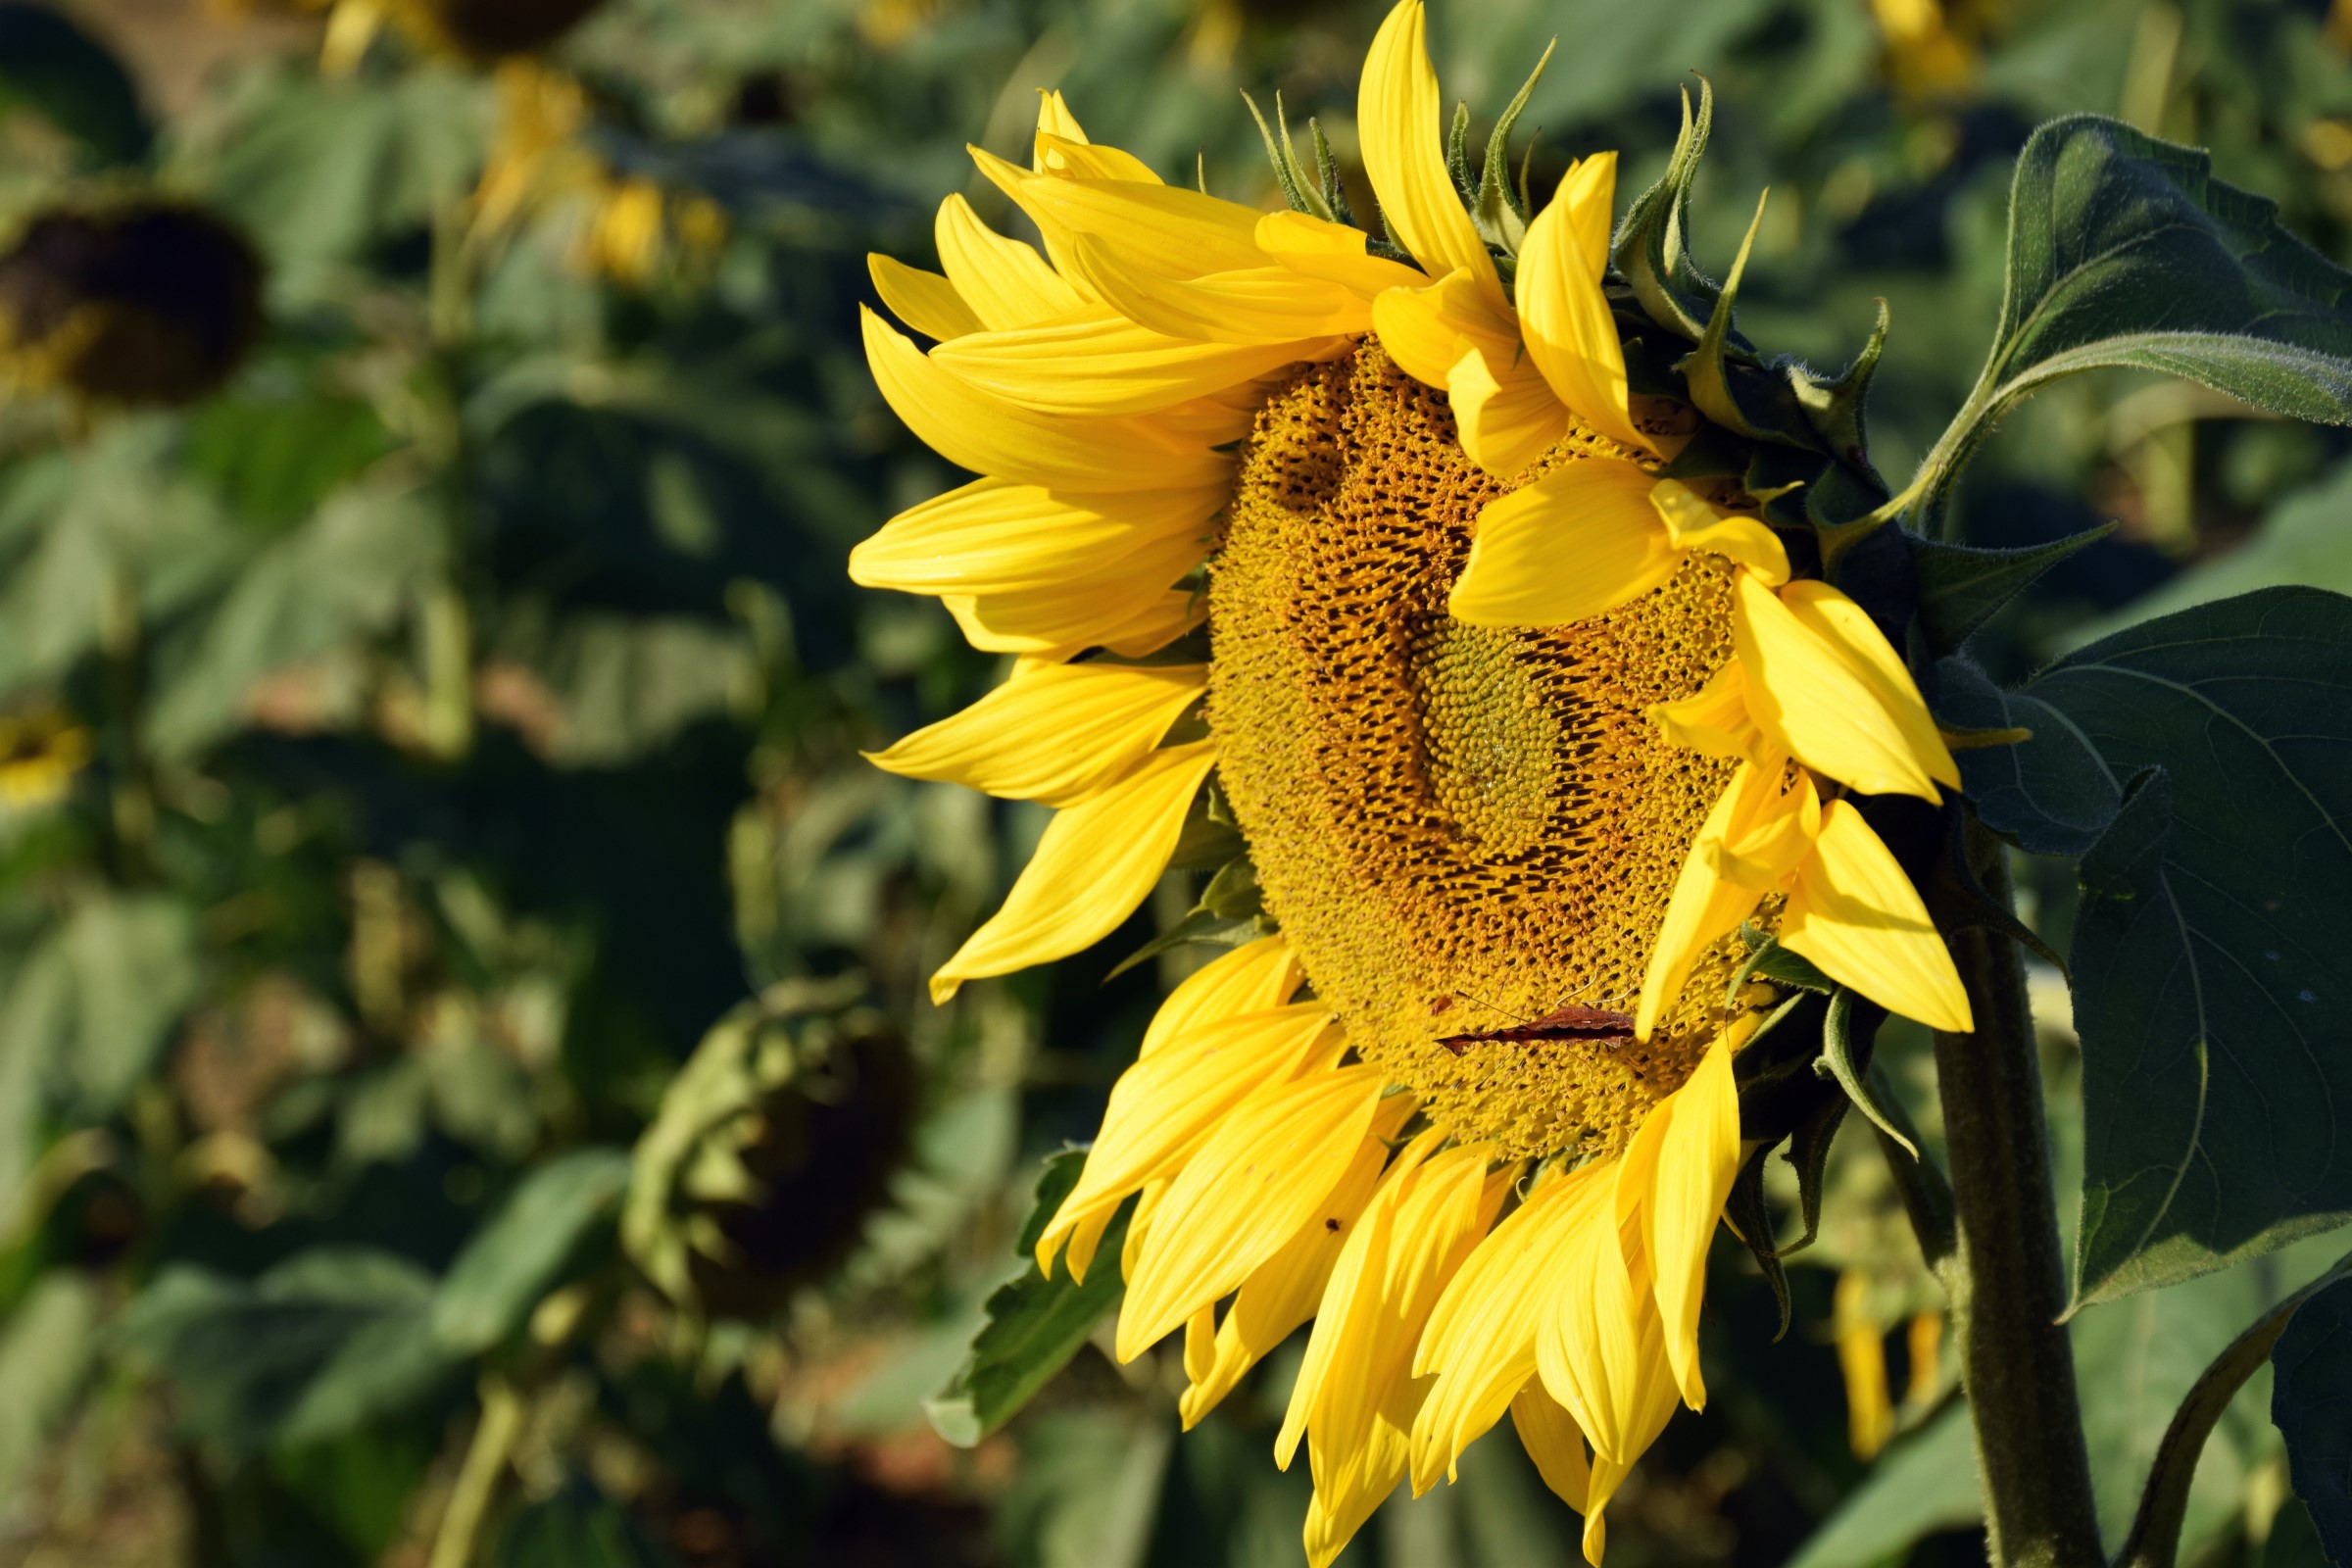 Sunflowers respond to light.